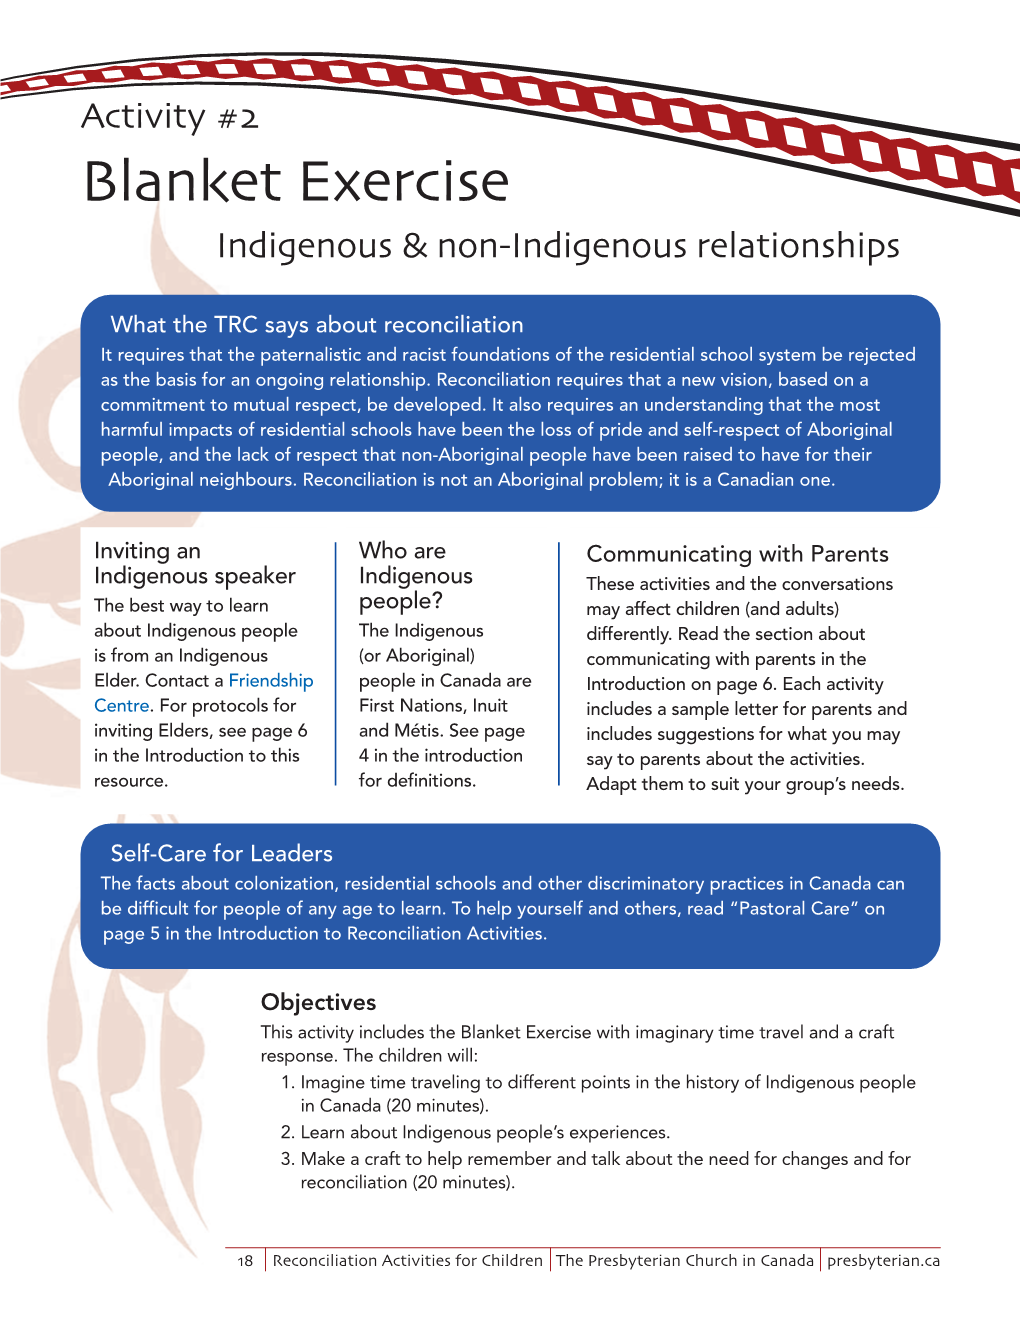 Blanket Exercise Indigenous & NonIndigenous Relationships